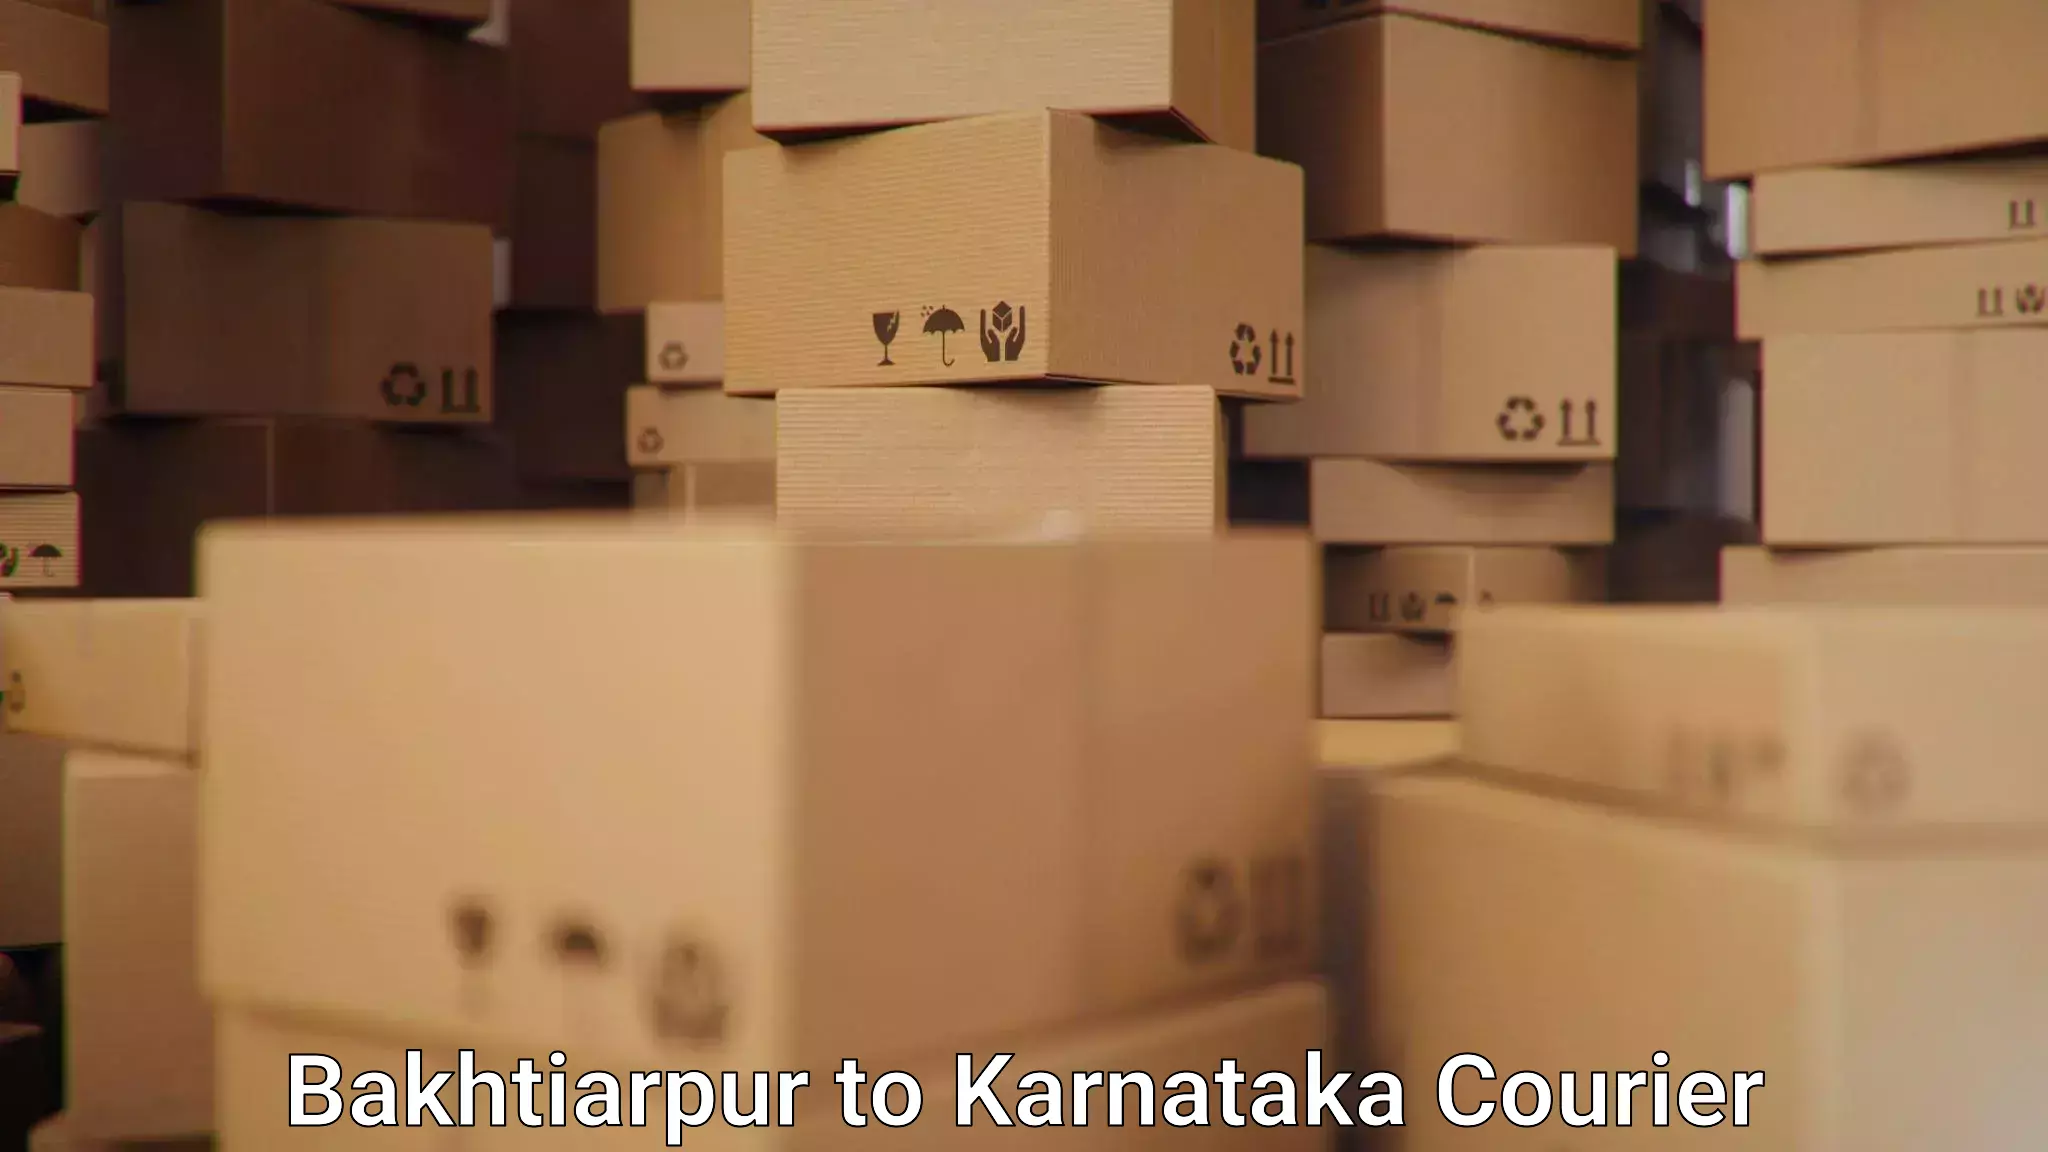 Efficient cargo handling Bakhtiarpur to Karnataka